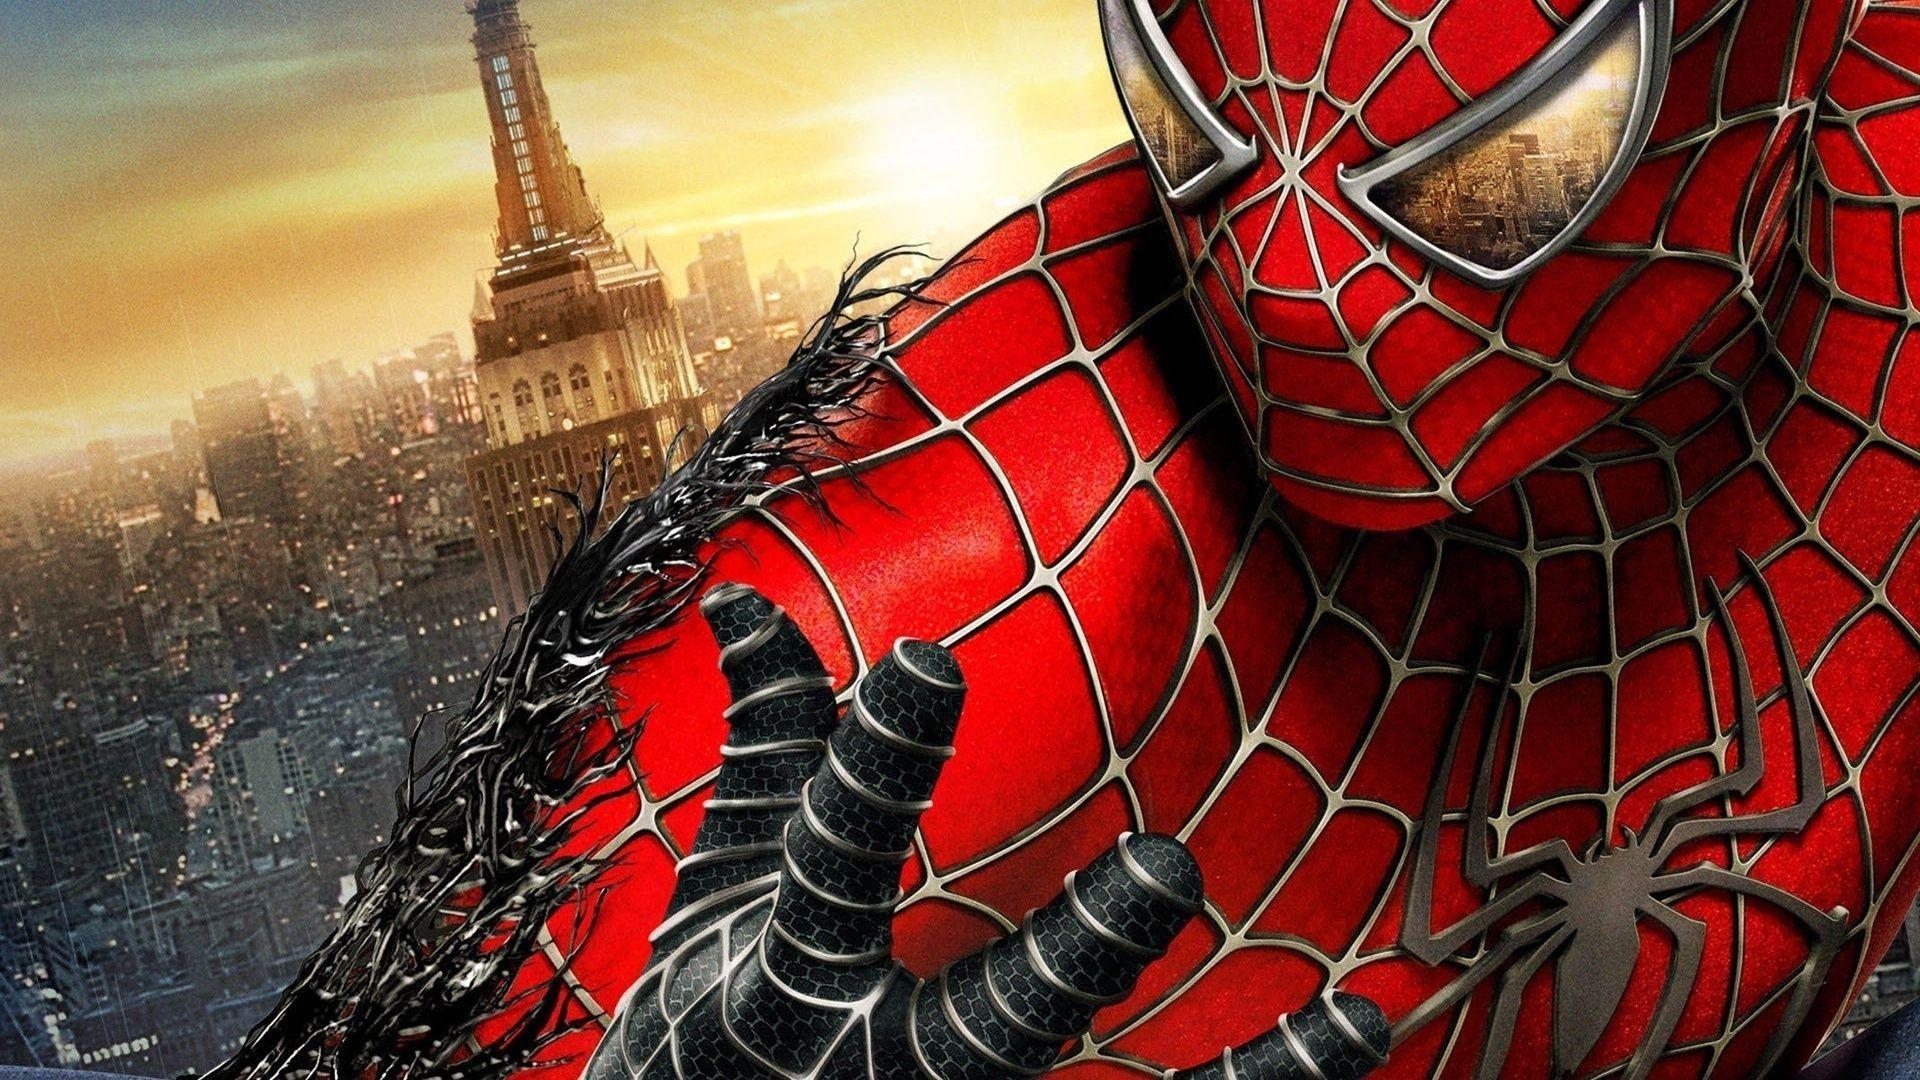 Spider Man Marvel Spider Man Comics. IPhone Wallpaper For Free